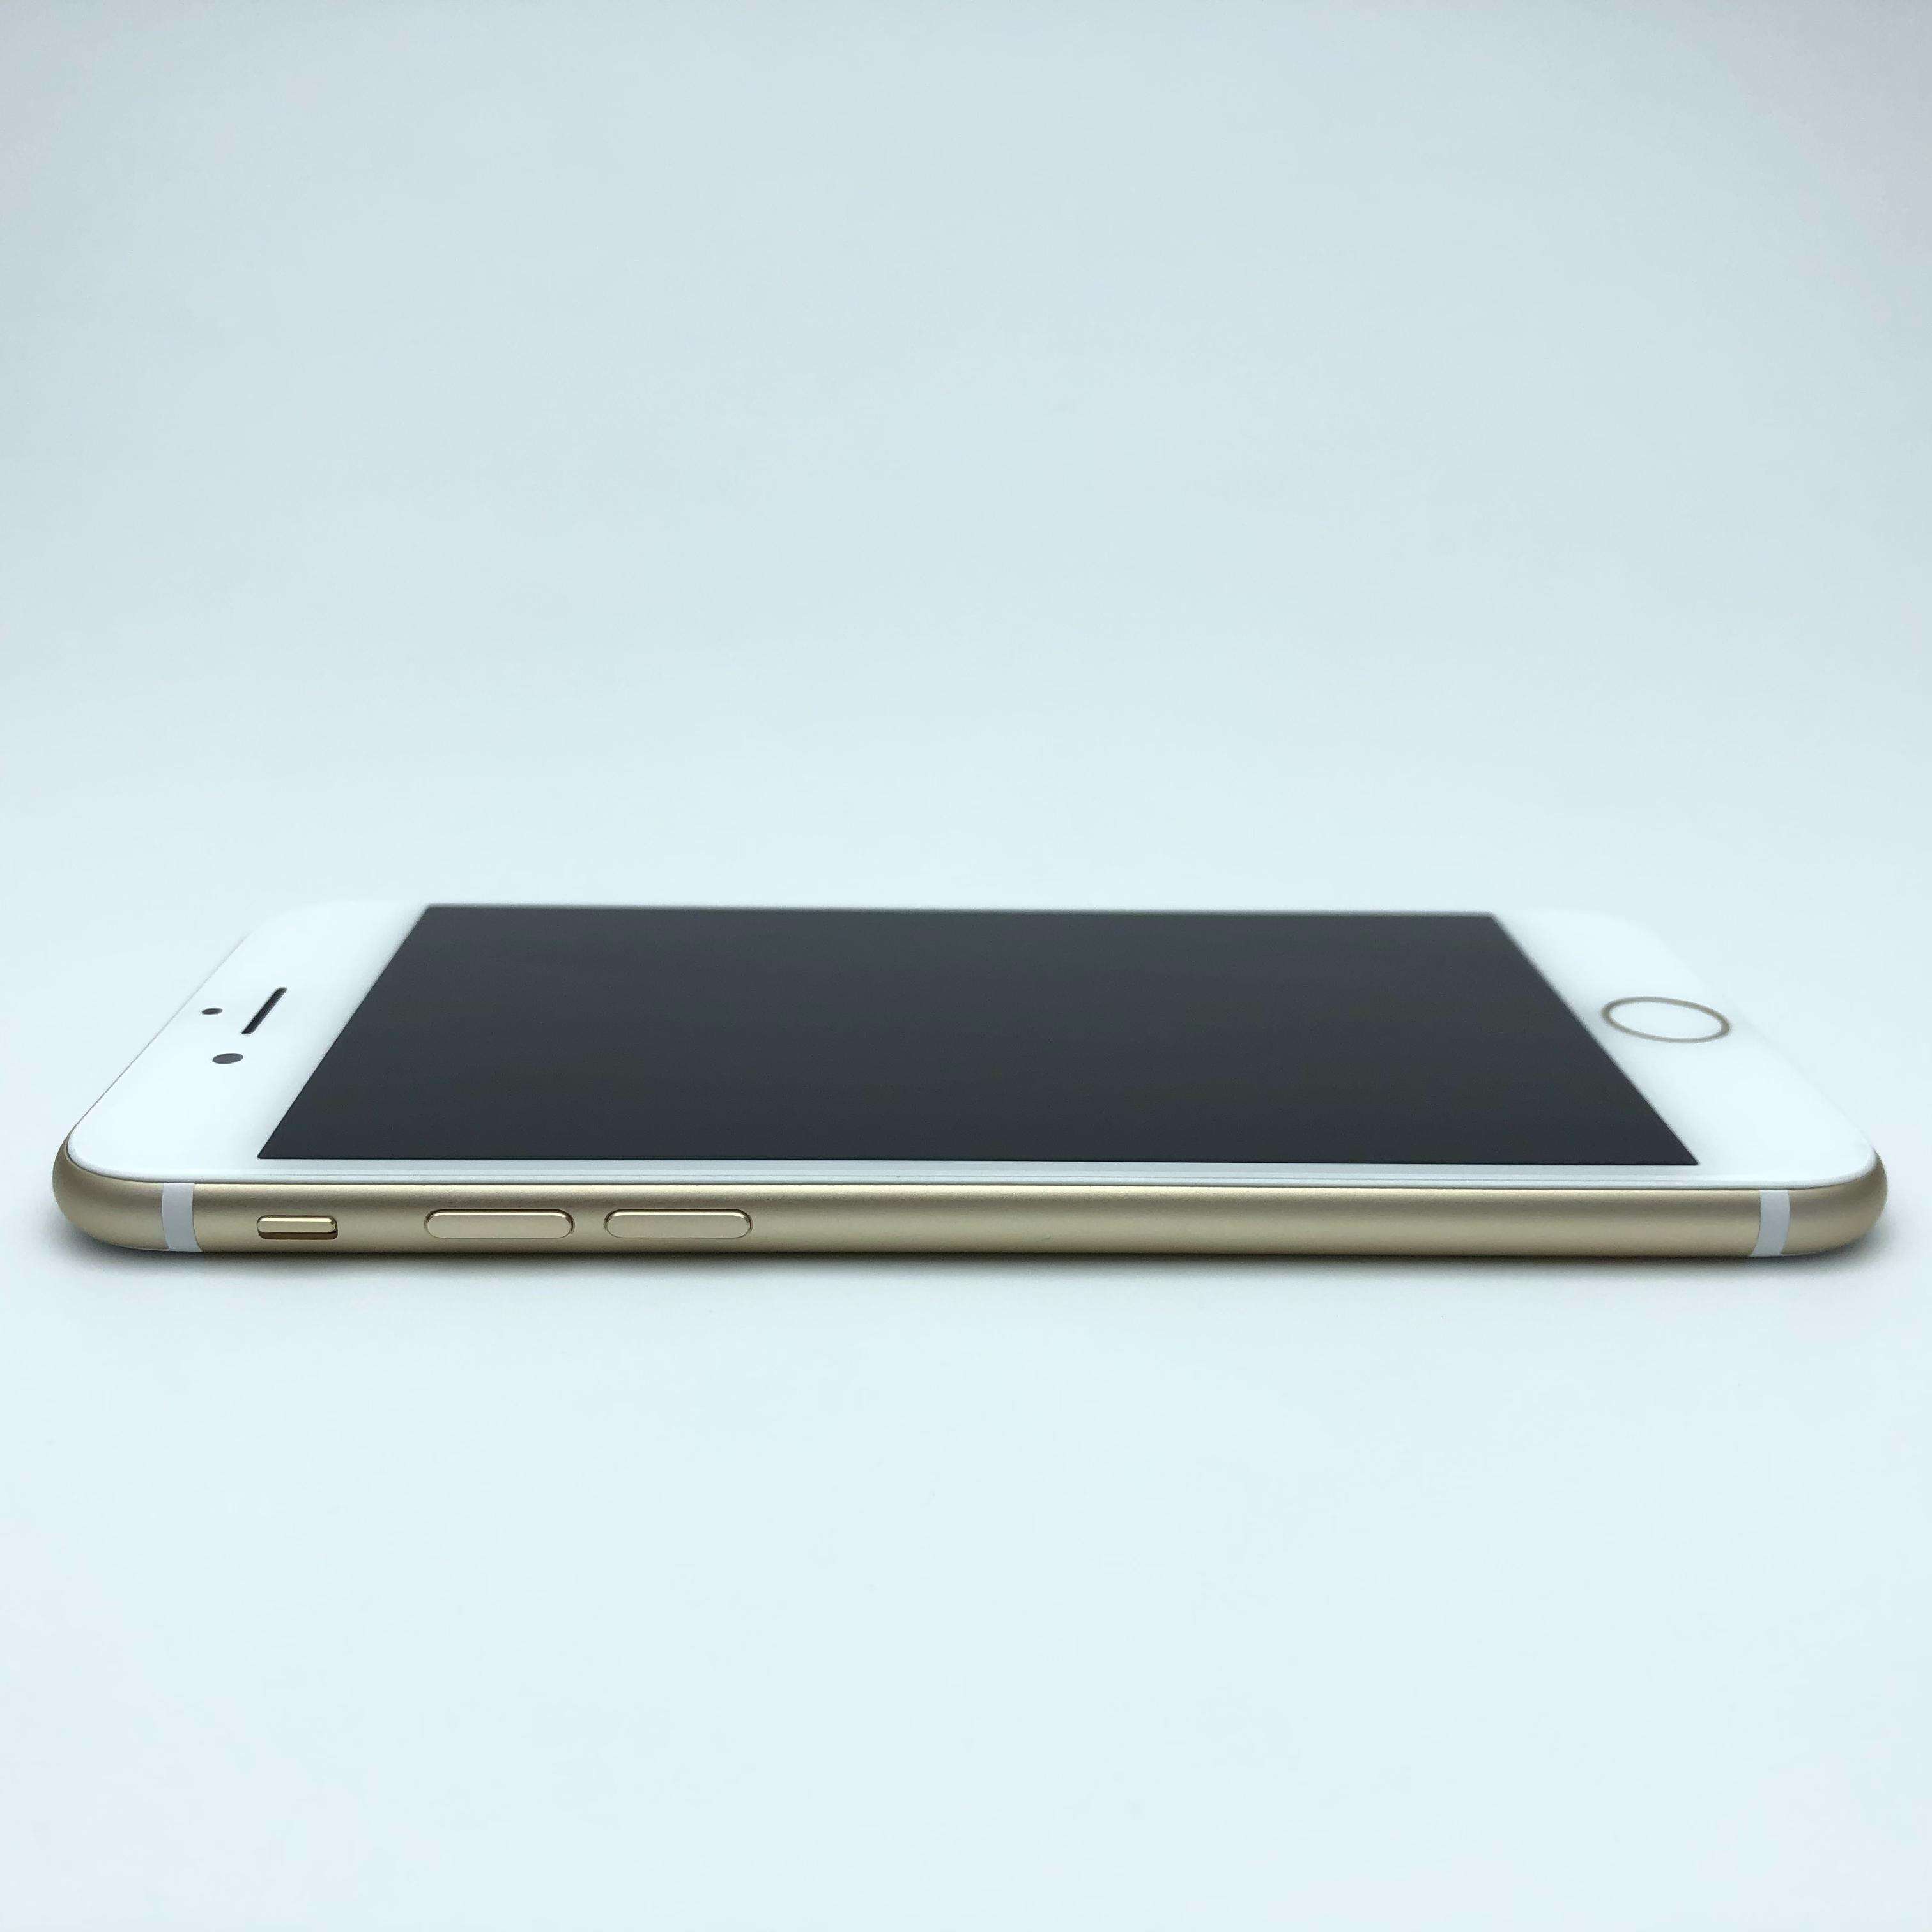 iPhone 7 32G 国行全网版 金色